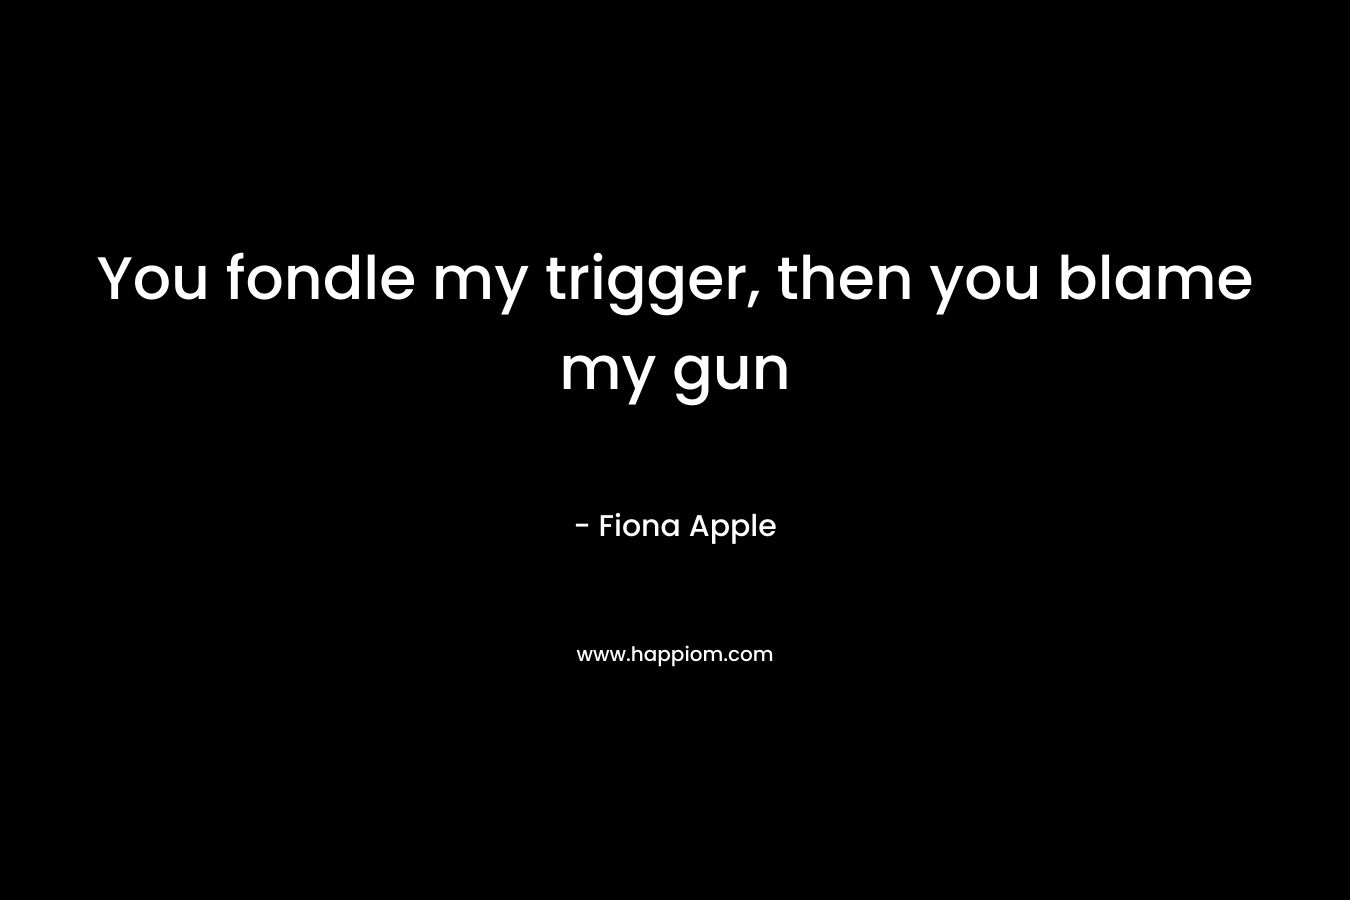 You fondle my trigger, then you blame my gun